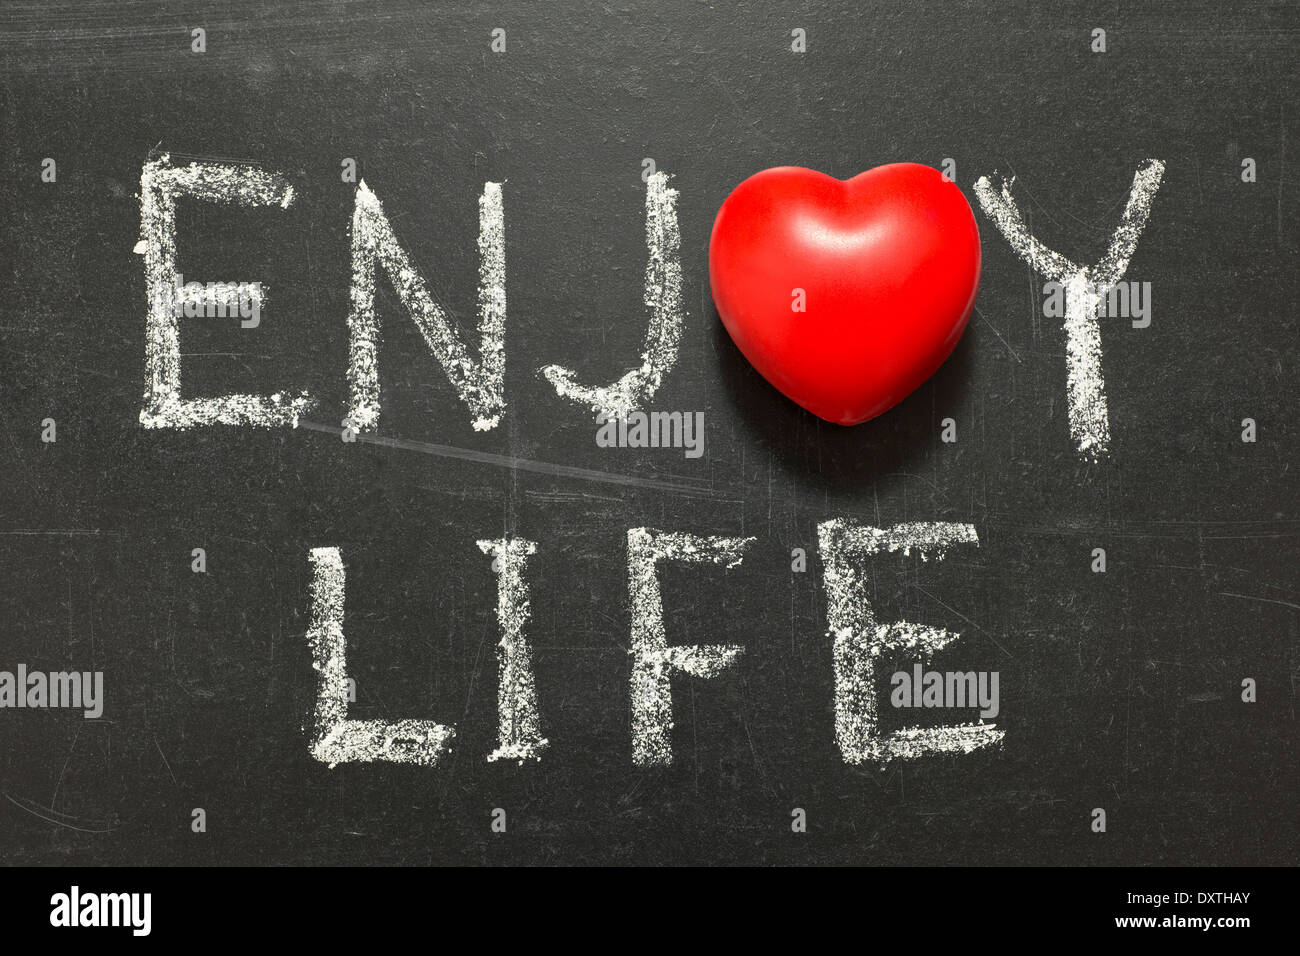 enjoy life phrase handwritten on chalkboard with heart symbol instead of O Stock Photo